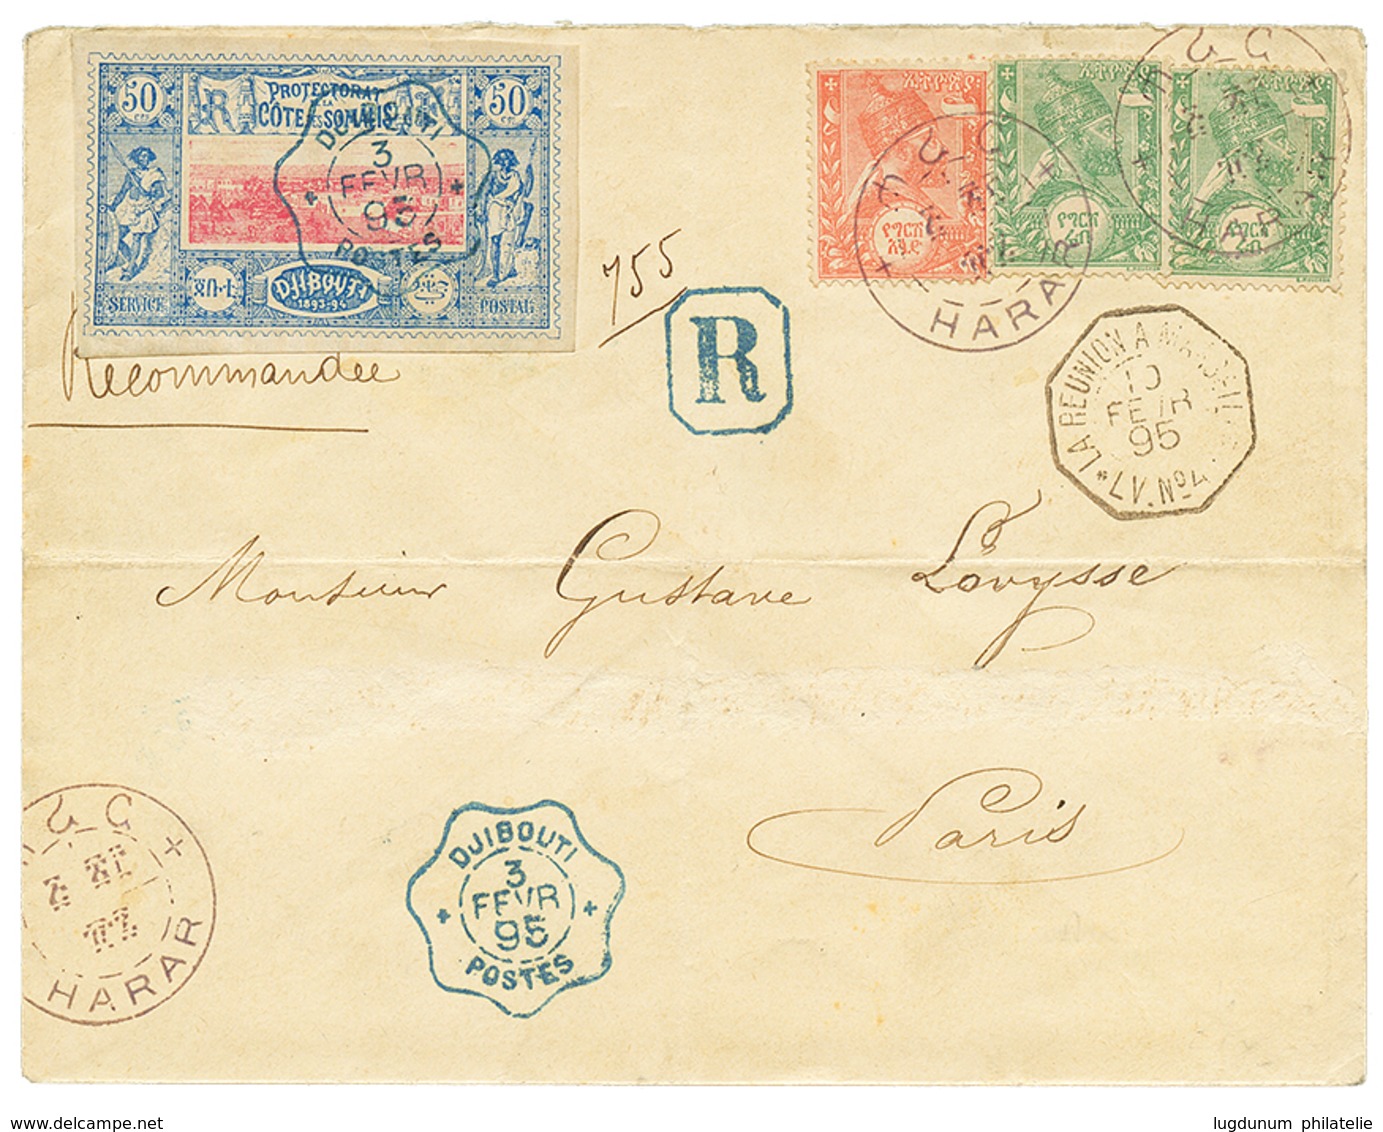 1162 1895 ETHIOPIA 1/4g(x2) + 1/2g Canc. HARAR + SOMALI COAST 50c Canc. DJIBOUTI On REGISTERED Envelope To FRANCE. Verso - Ethiopie